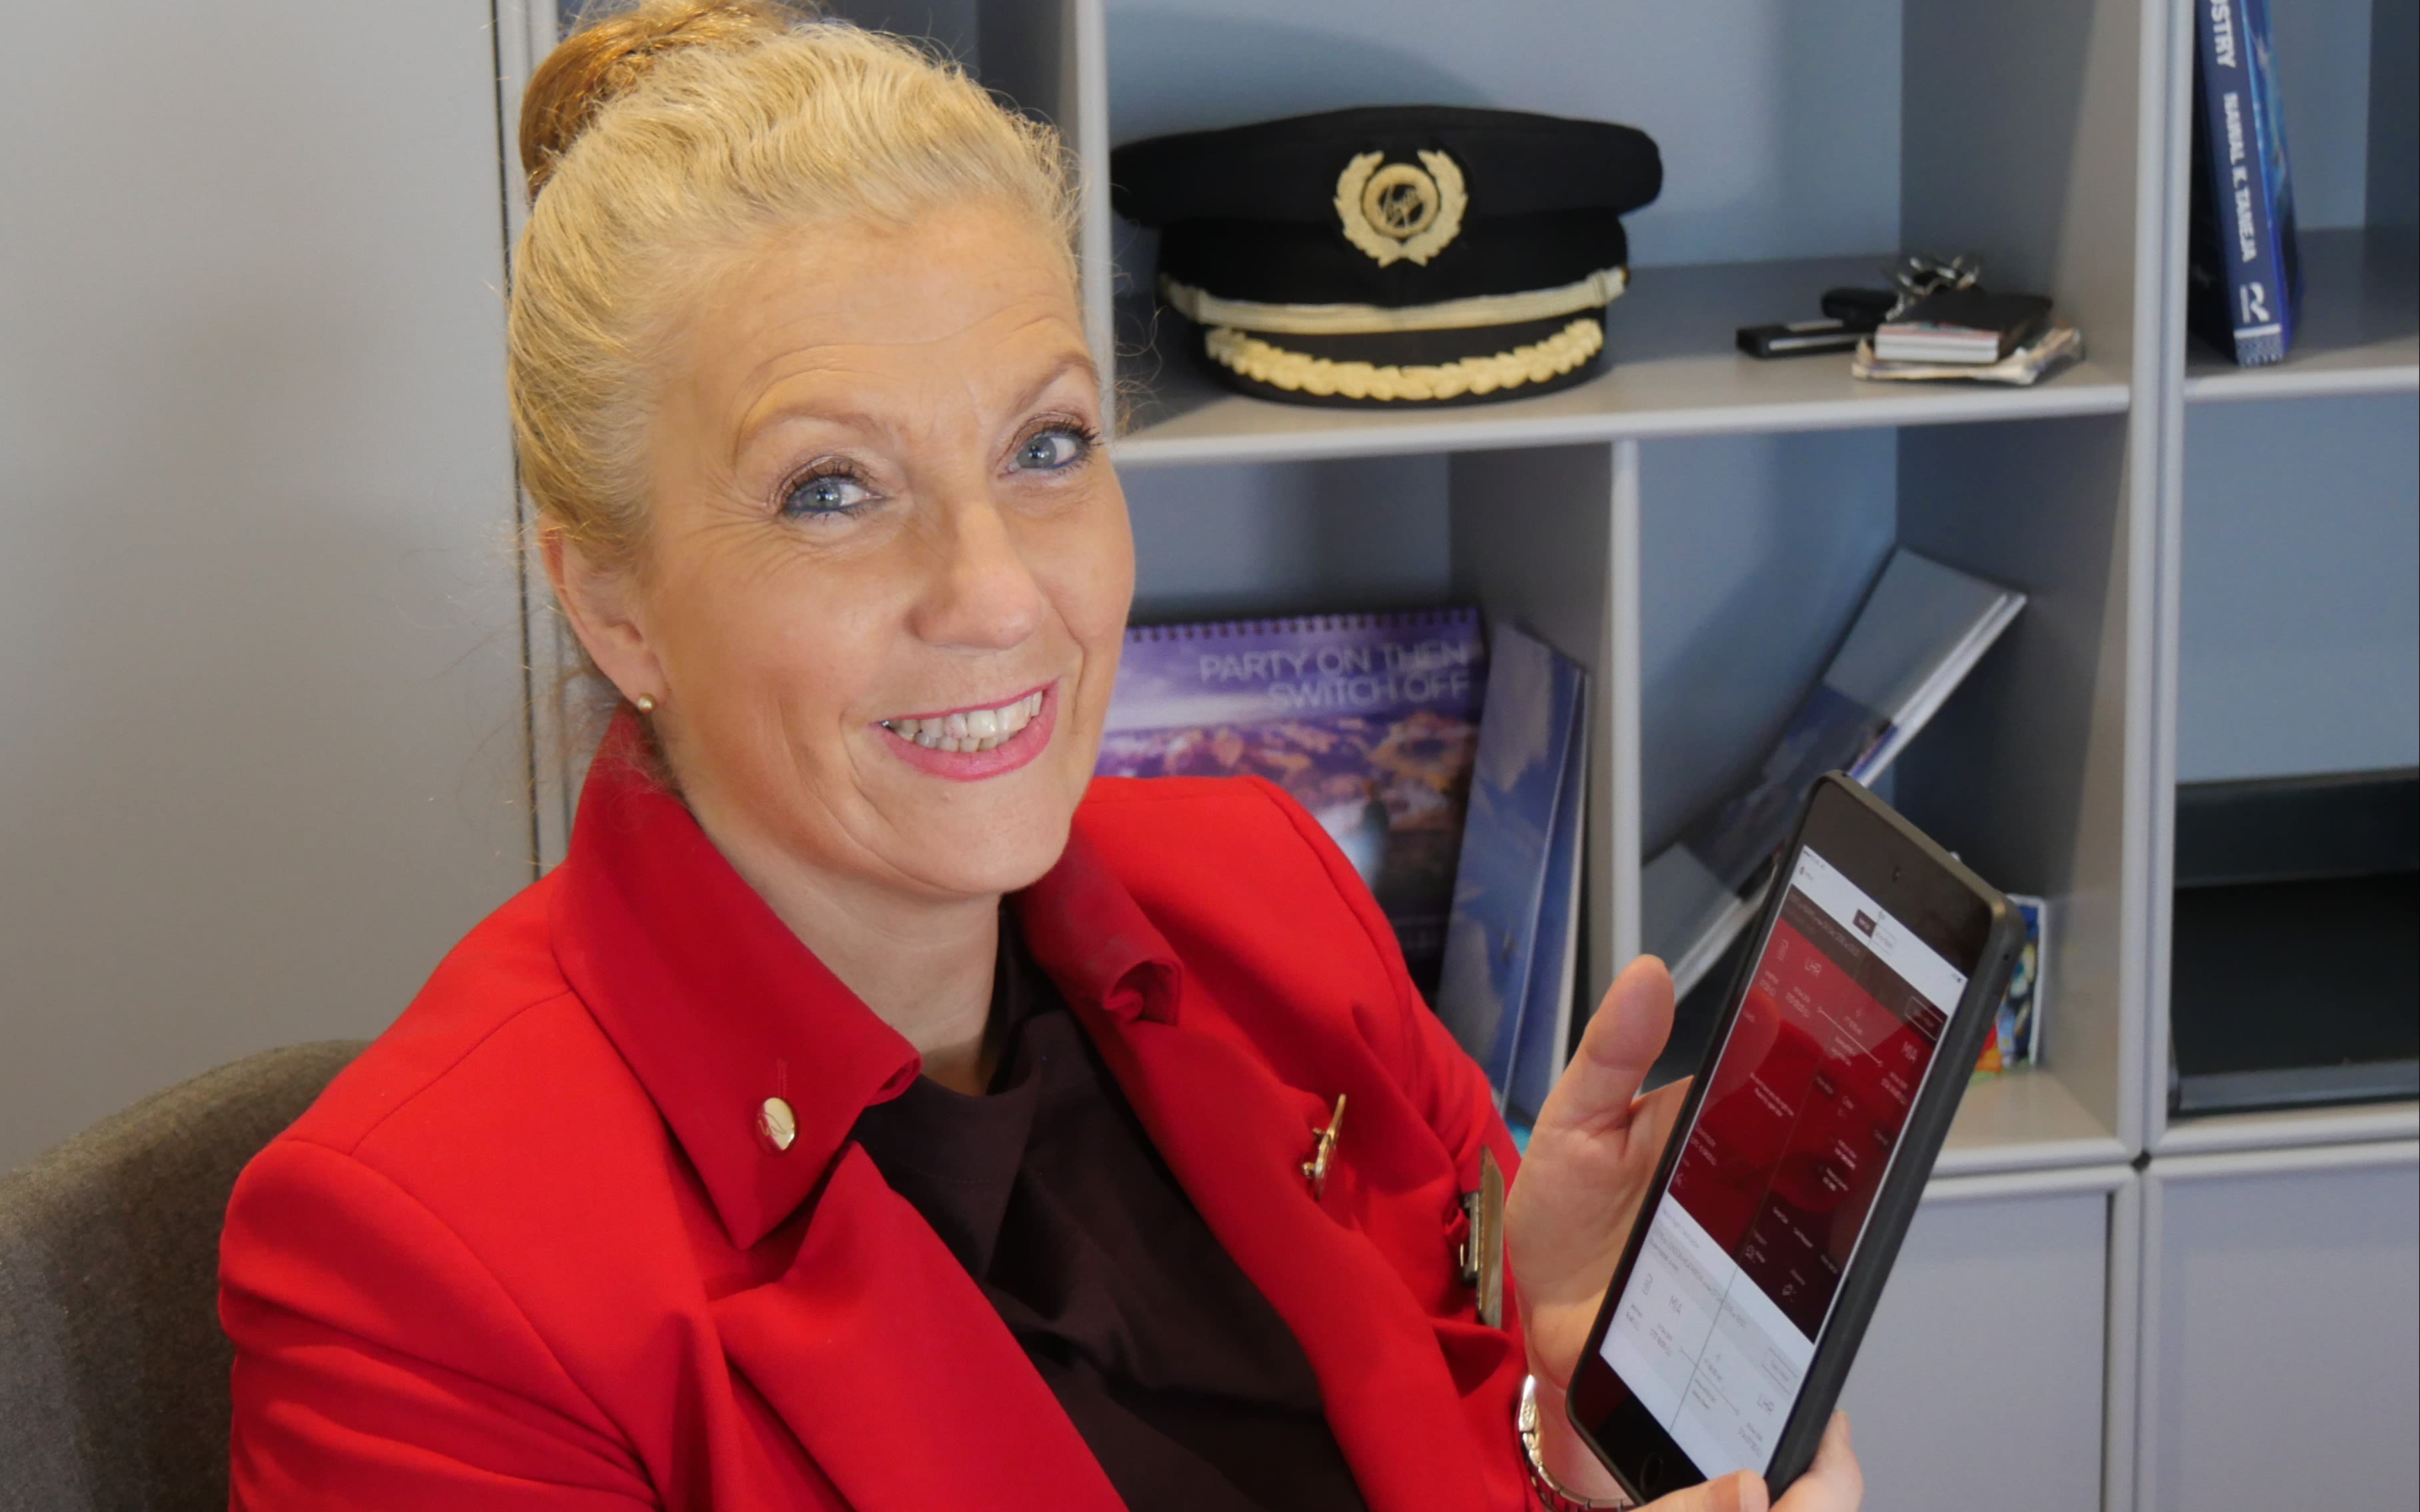 A Virgin Atlantic cabin crew member uses a tablet